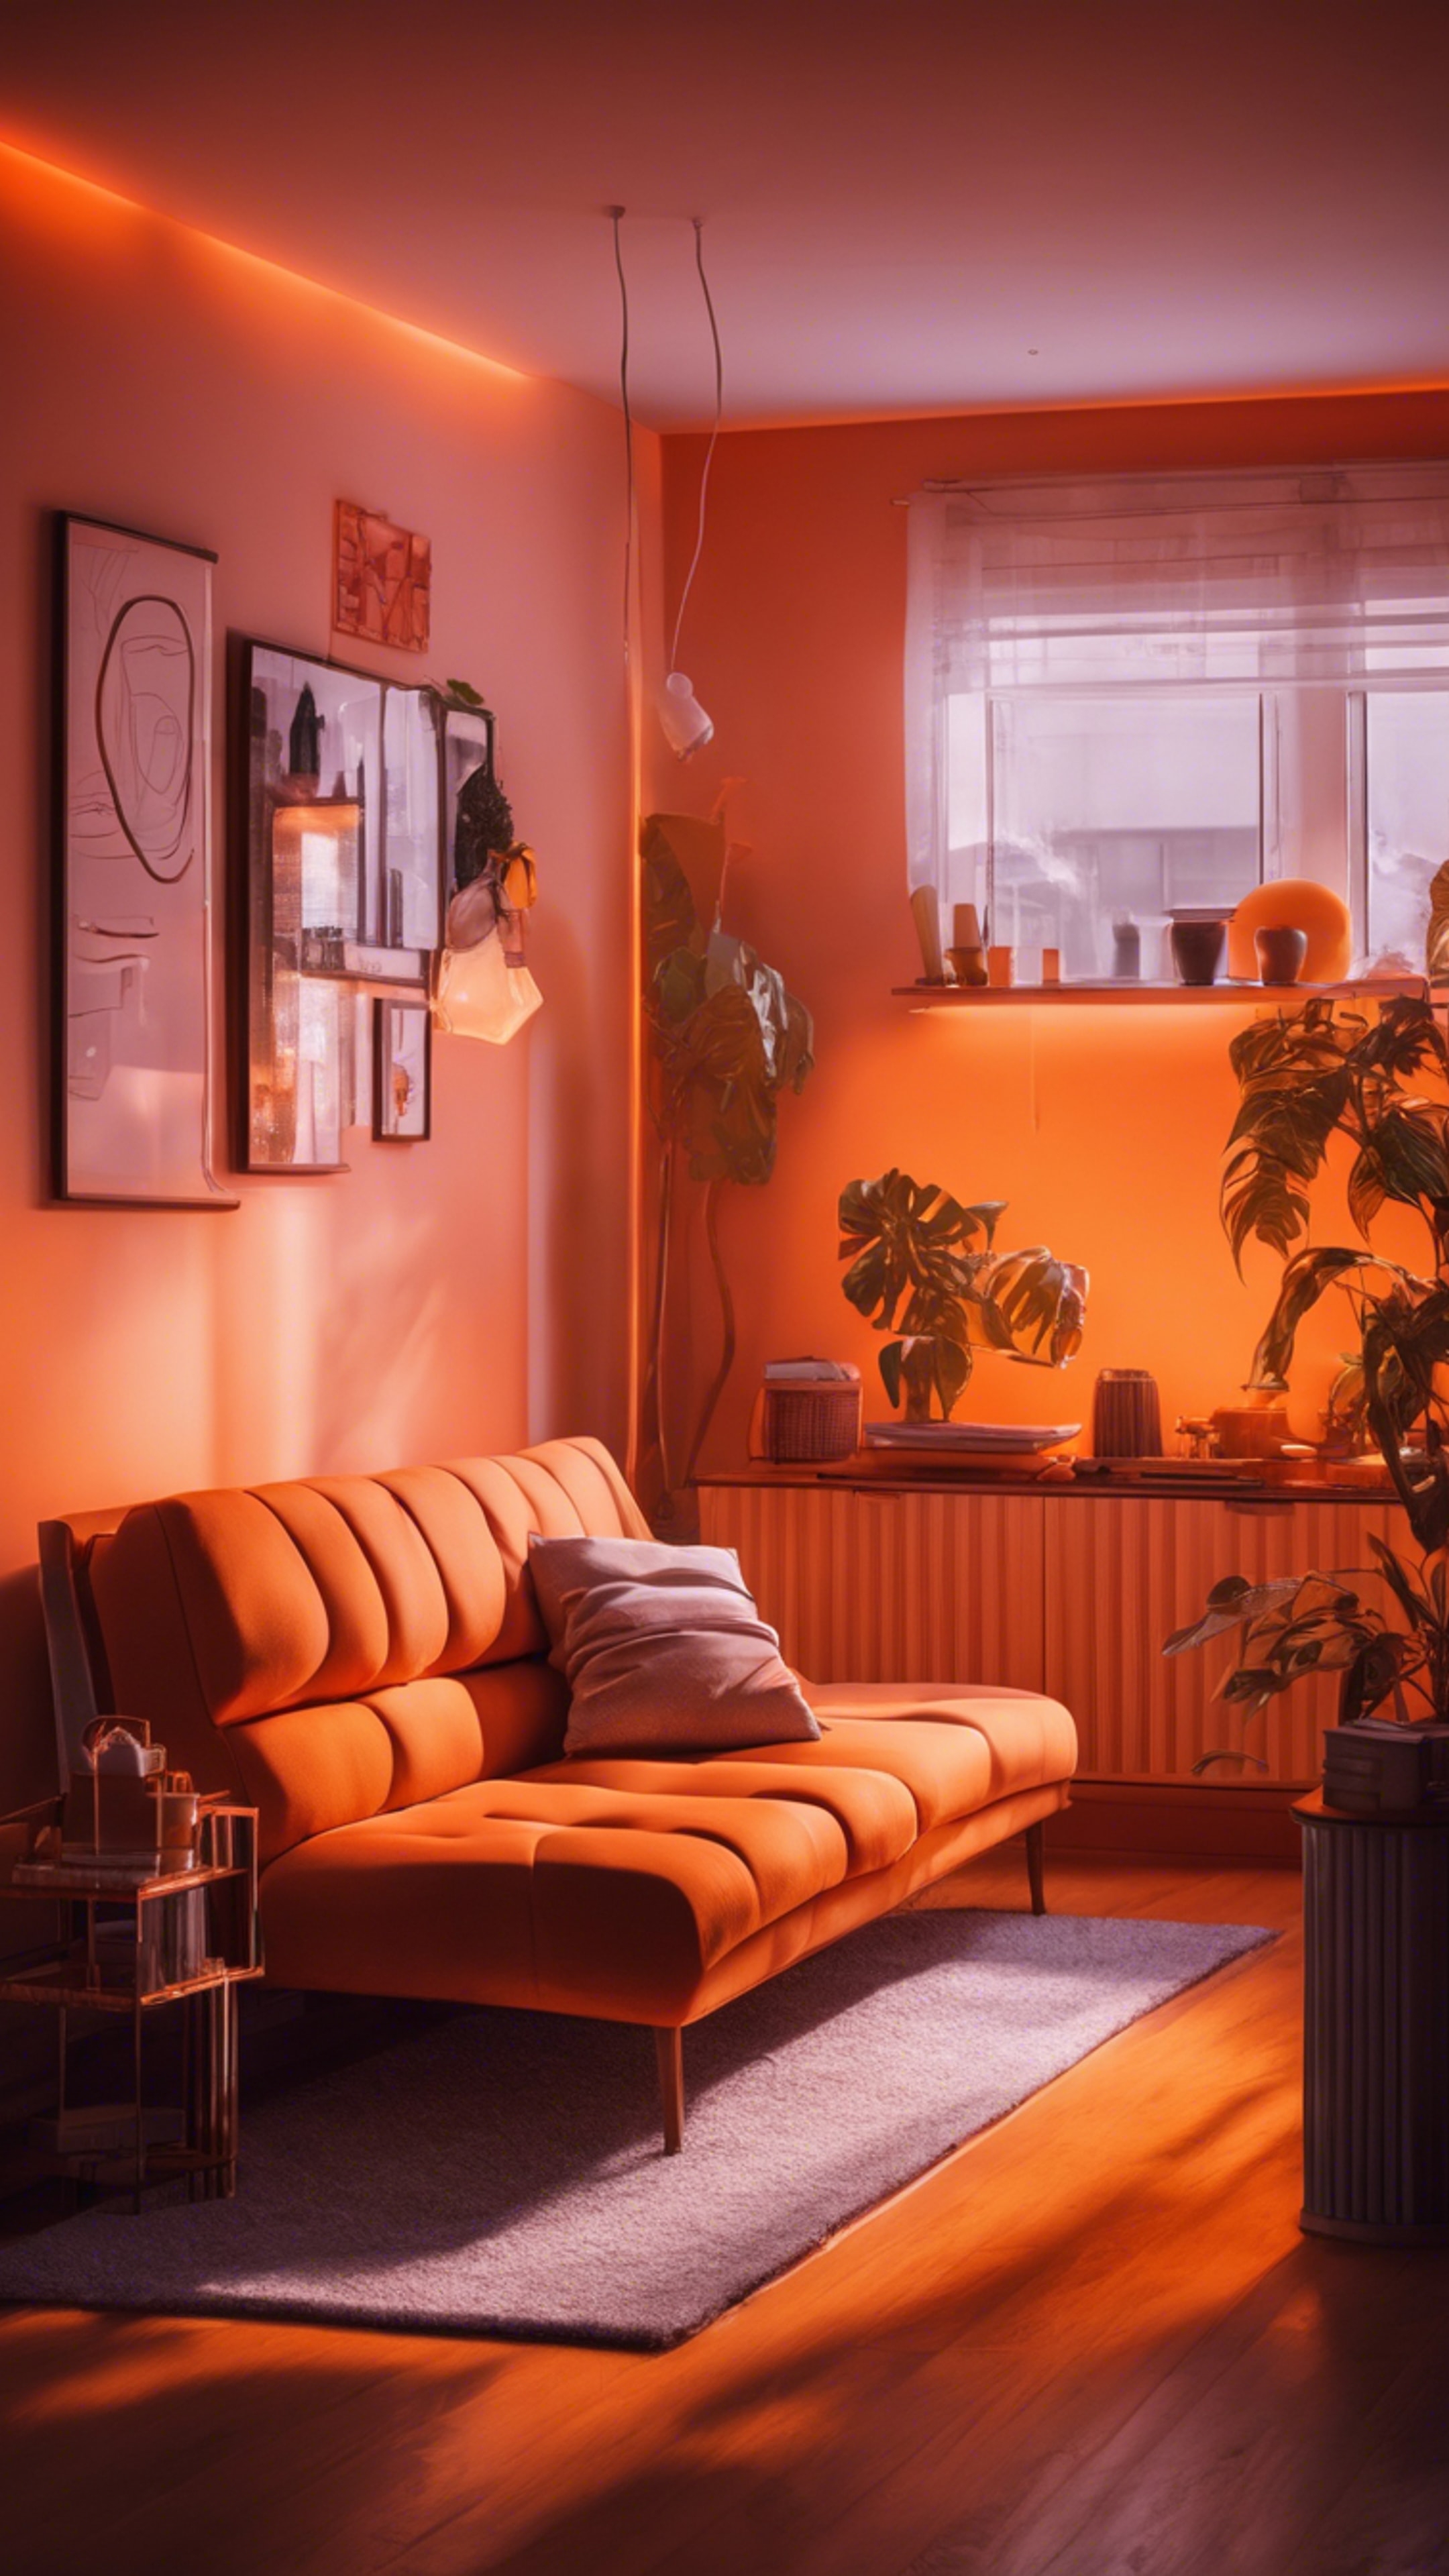 A fresh orange living room with trendy neon lights casting beautiful shadows. Tapetai[39213640e9864c1aa0c4]